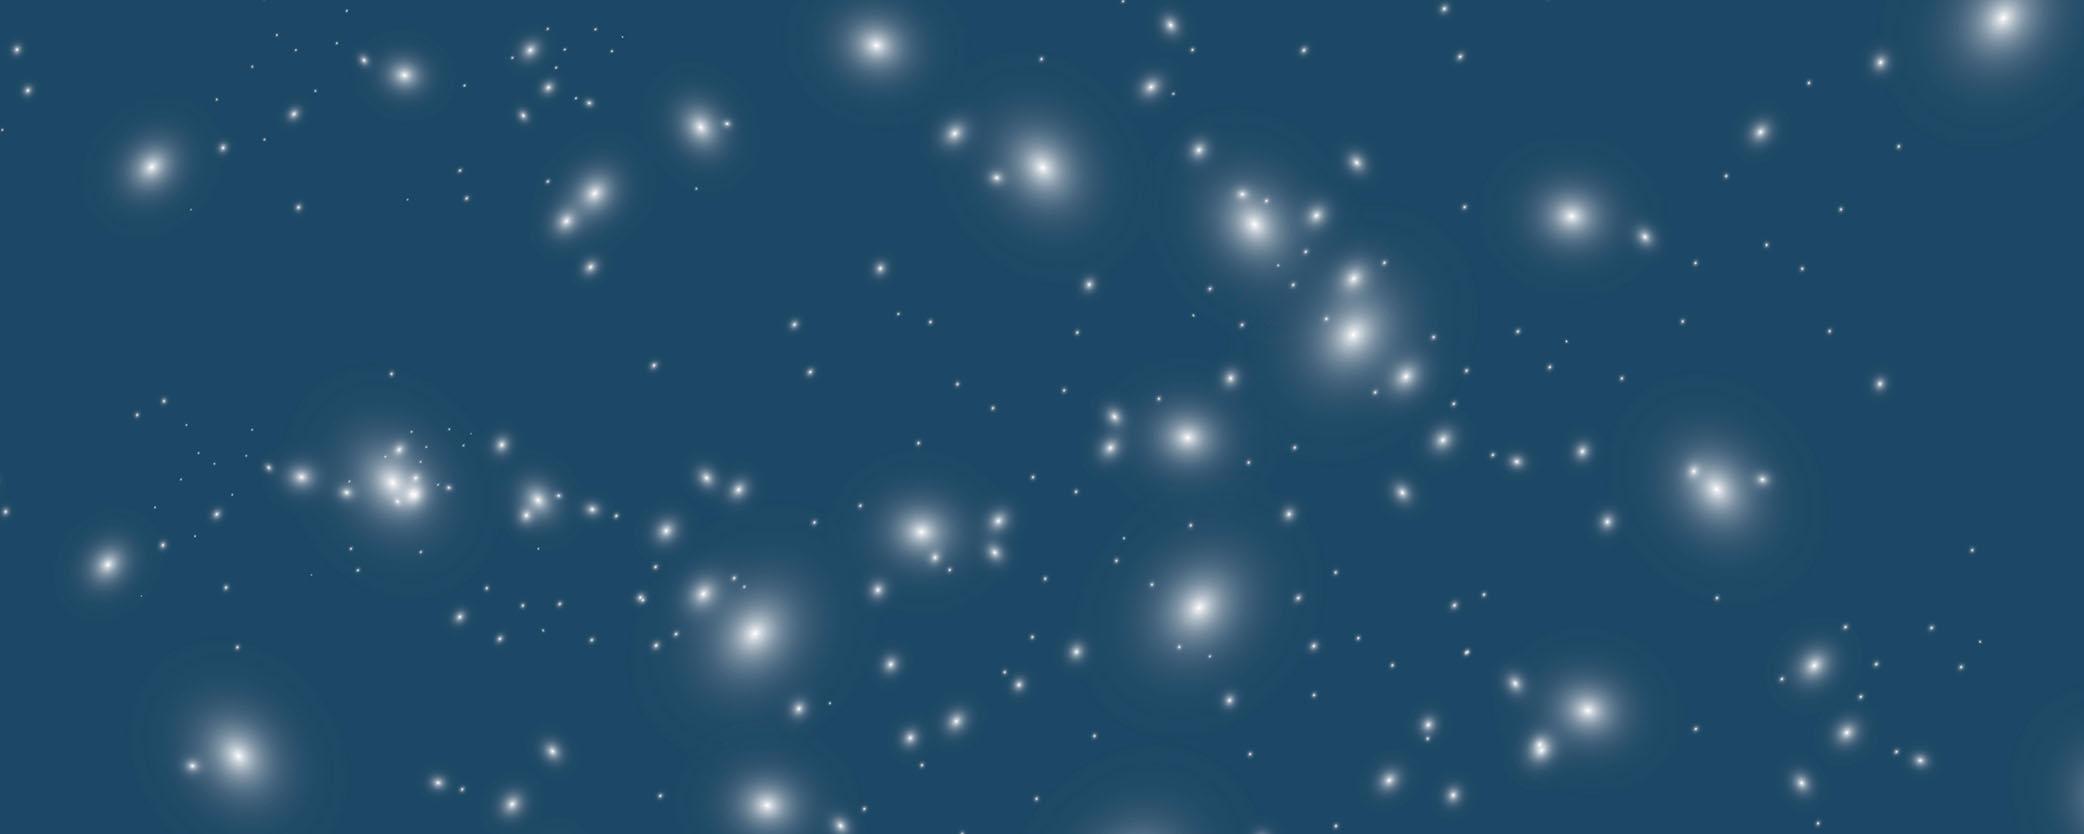 Background image of stars